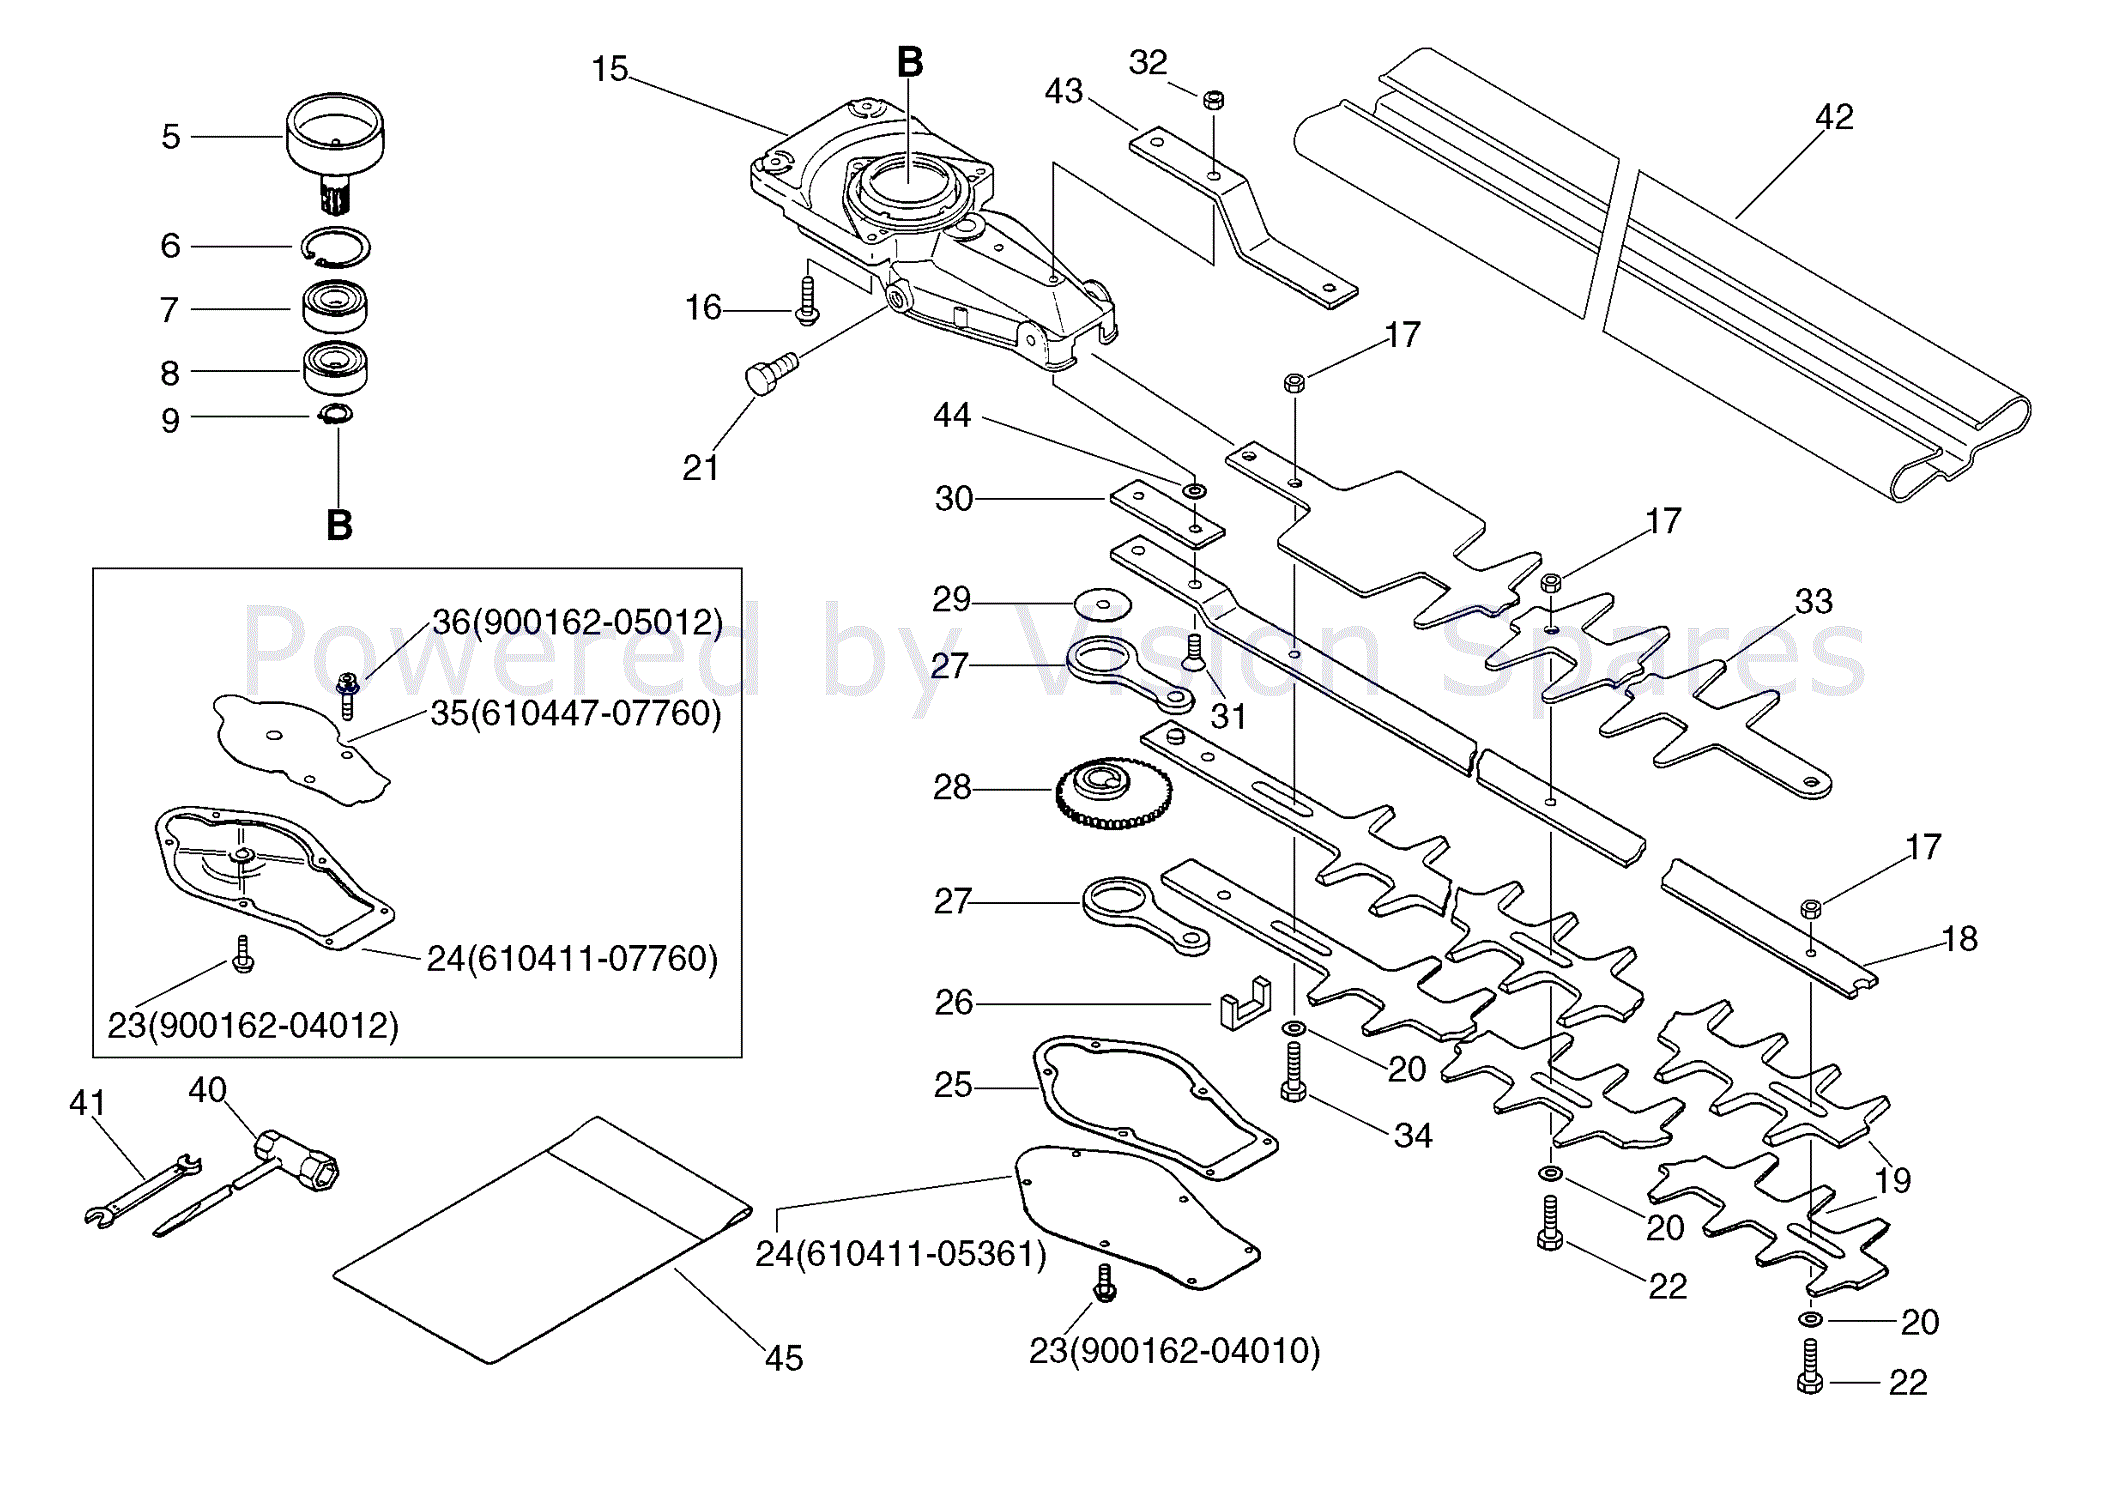 Echo Hedge Trimmer Parts Diagram - General Wiring Diagram